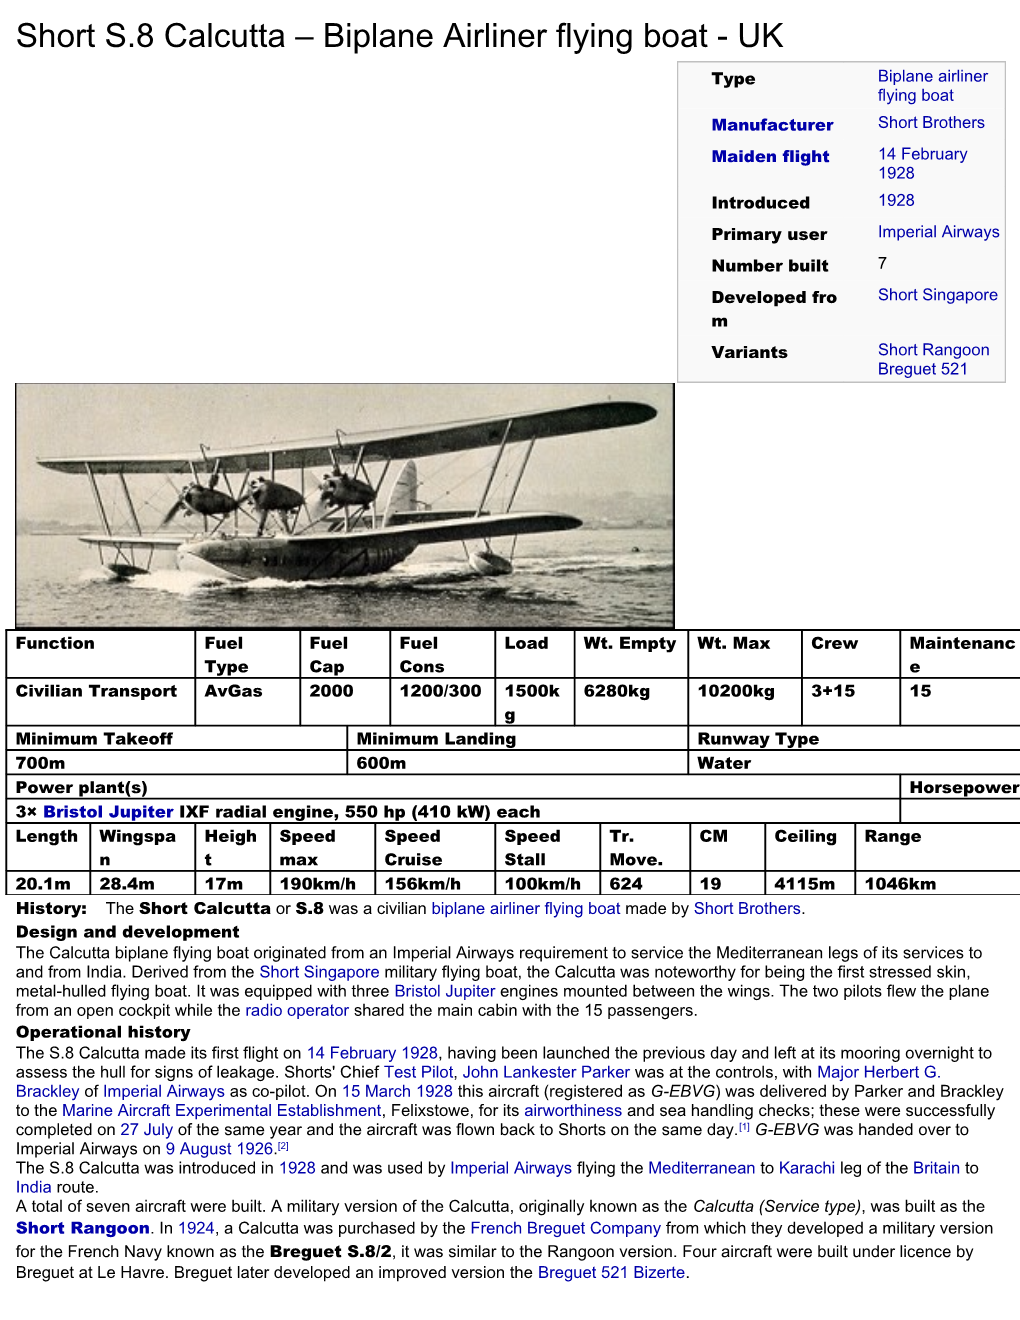 Short S.8 Calcutta Biplane Airliner Flying Boat - UK